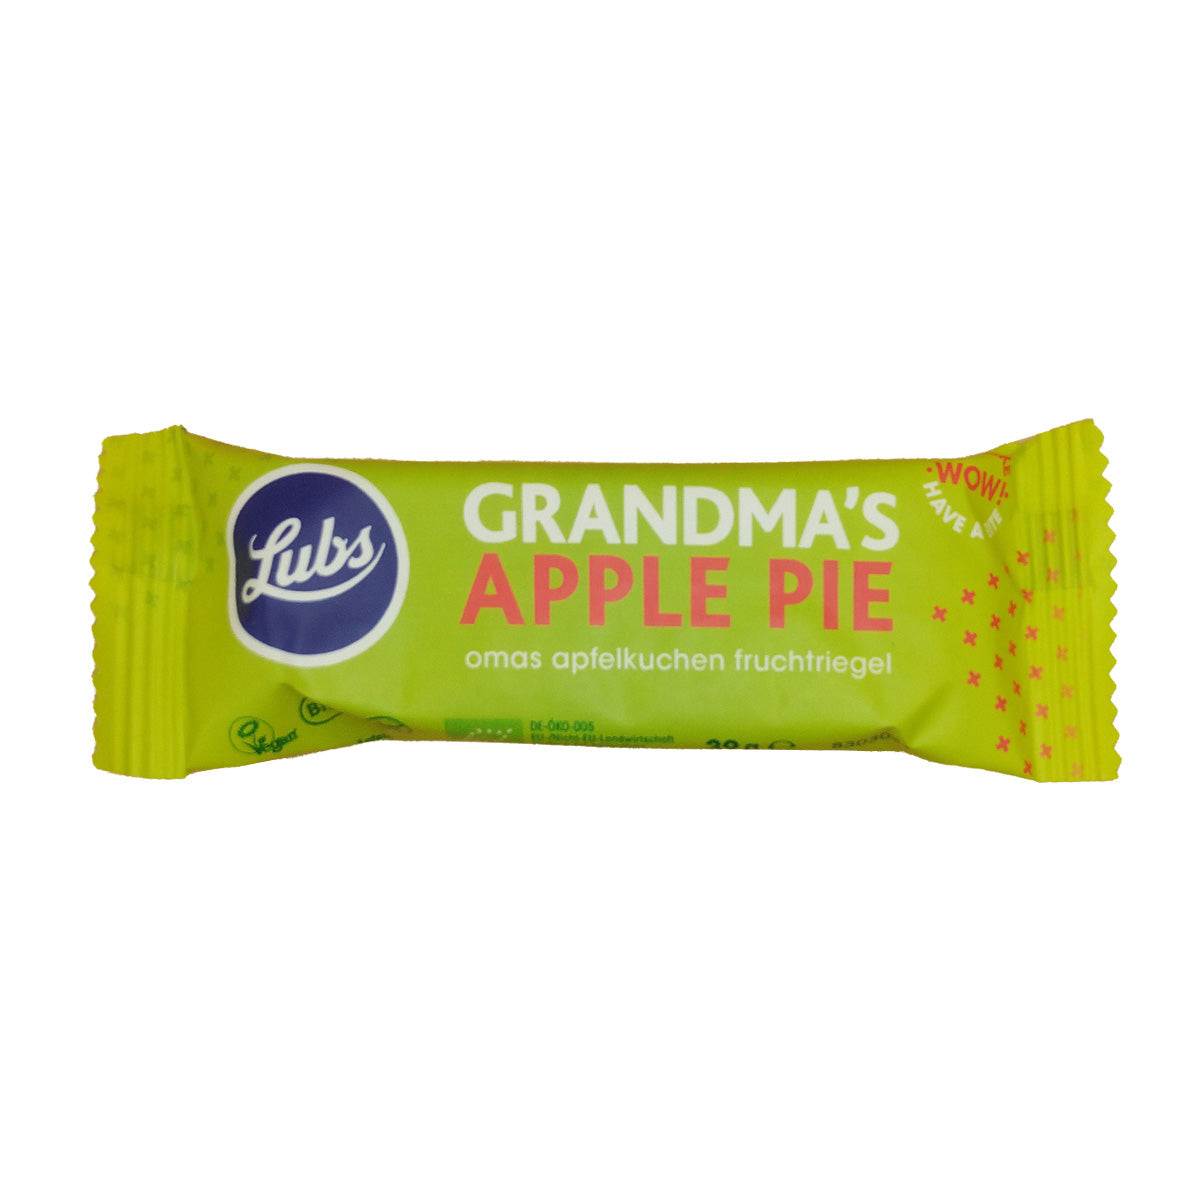 Lubs Bio Lubs Grandma's Apple Pie Fruchtriegel, 39g